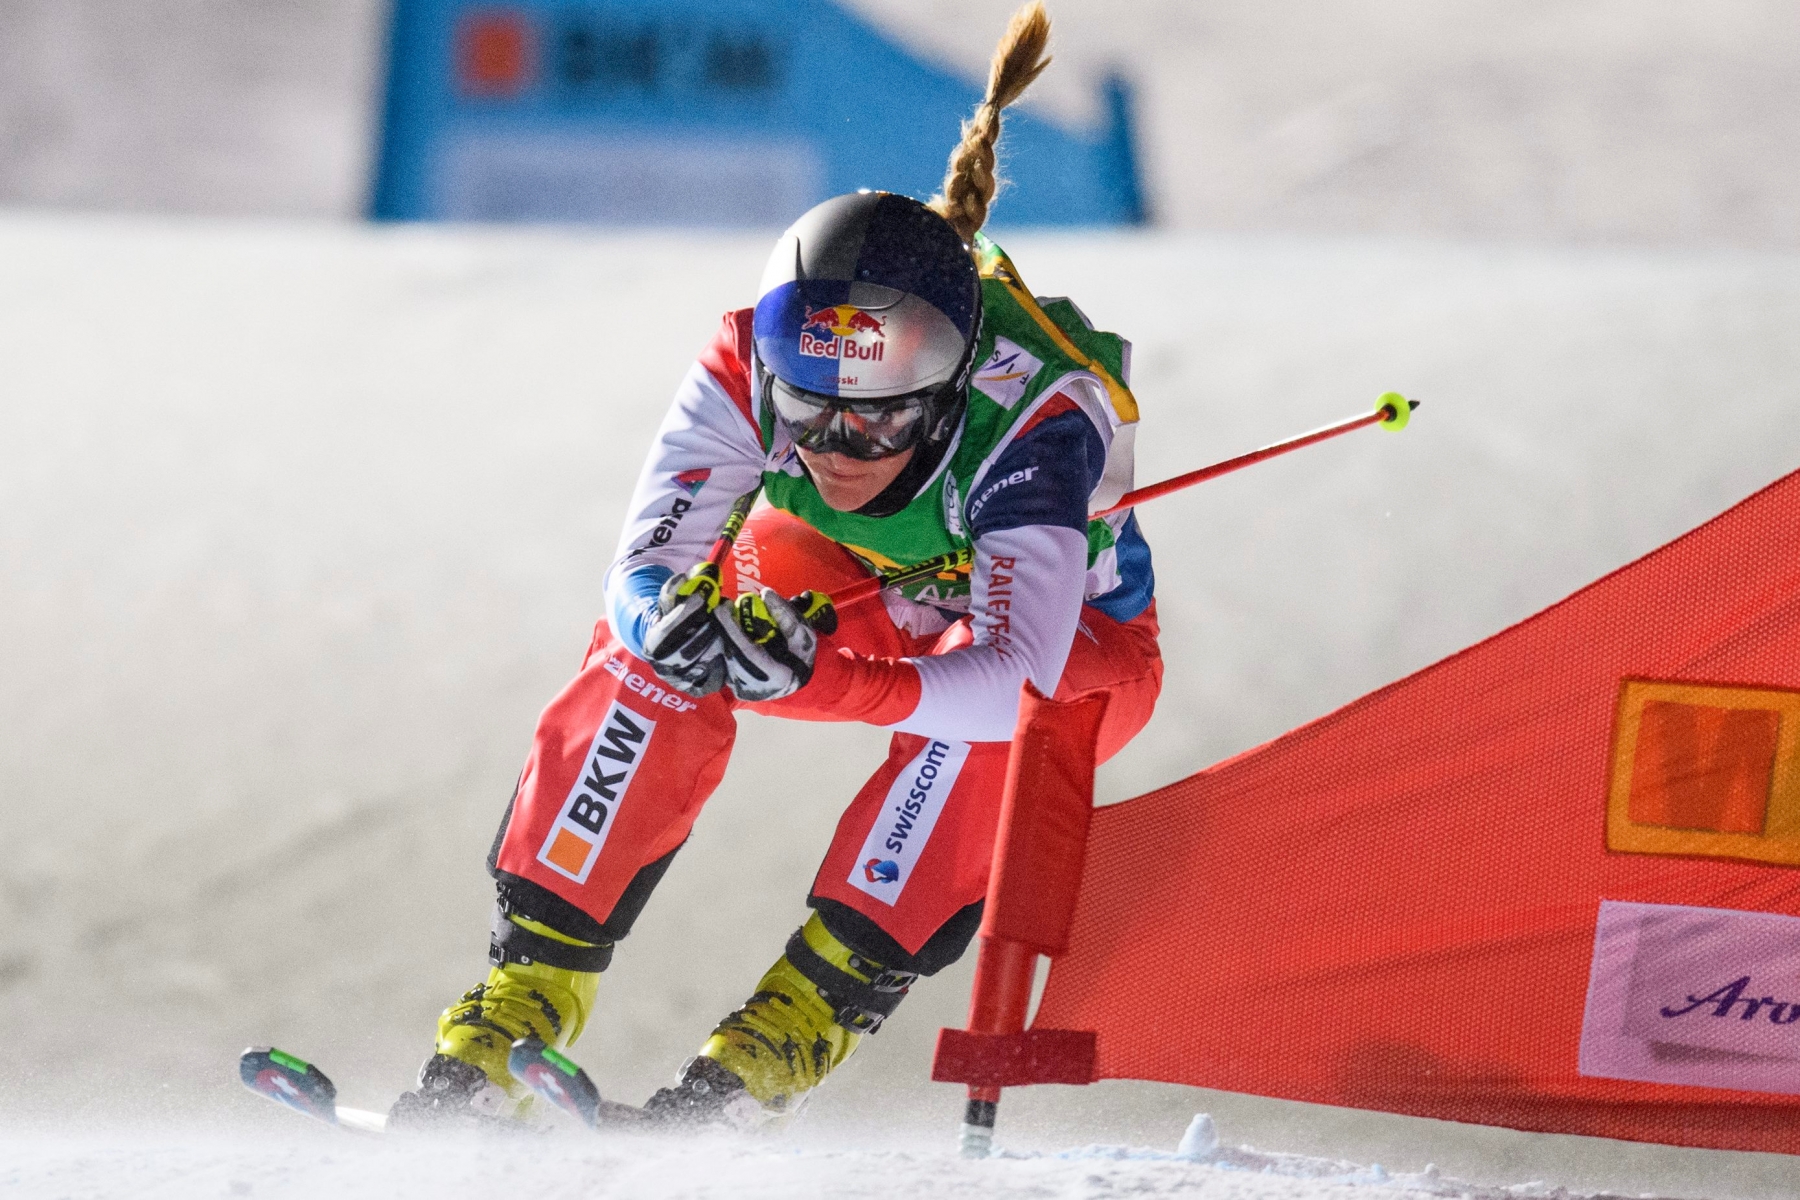 Fanny Smith of Switzerland speeds down the track during the Ski Cross World Cup in Arosa, Switzerland, on Tuesday, December 13, 2016. (KEYSTONE/Gian Ehrenzeller) SKI FREESTYLE CROSS WELTCUP 2016/17 AROSA